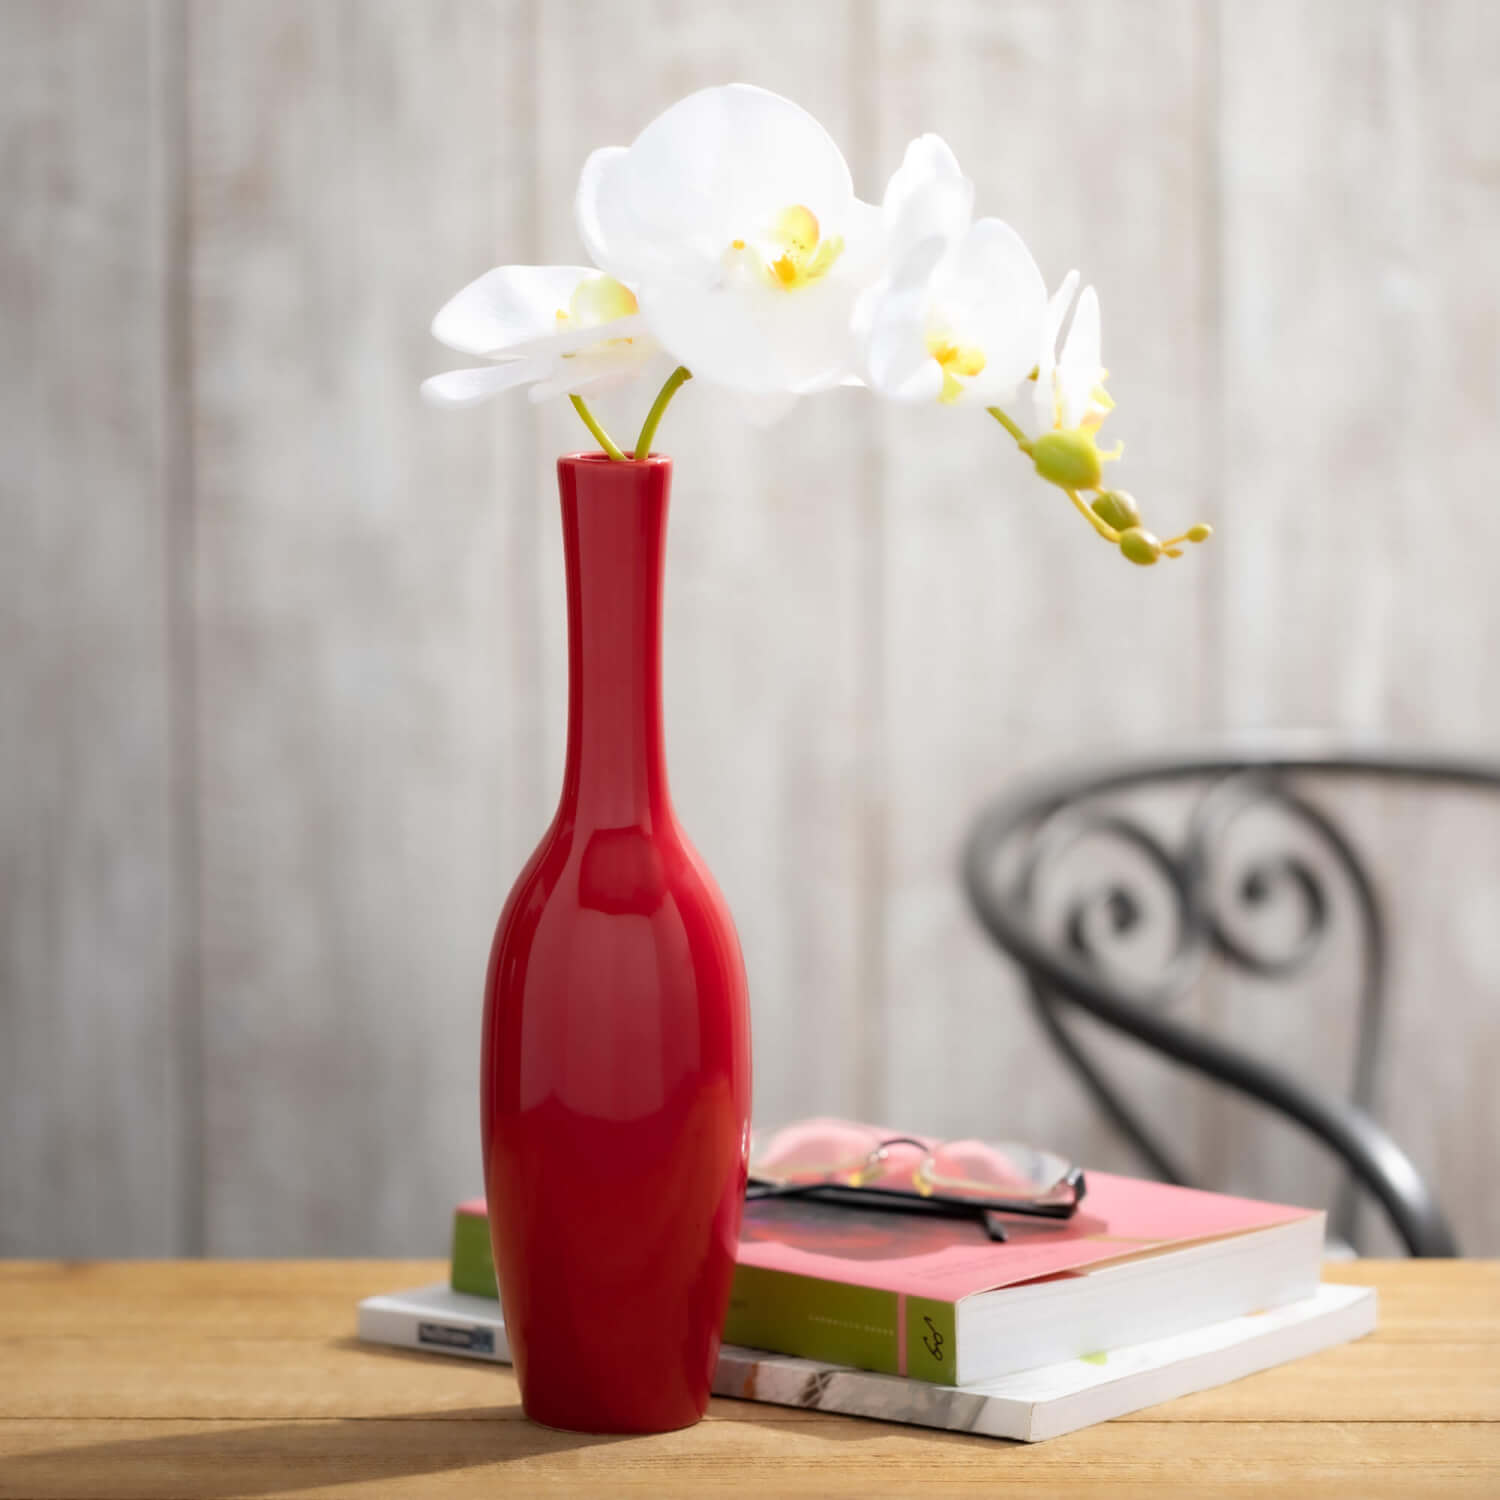 Glazed Ceramic Red Vases Elevate Home Decor - Vases